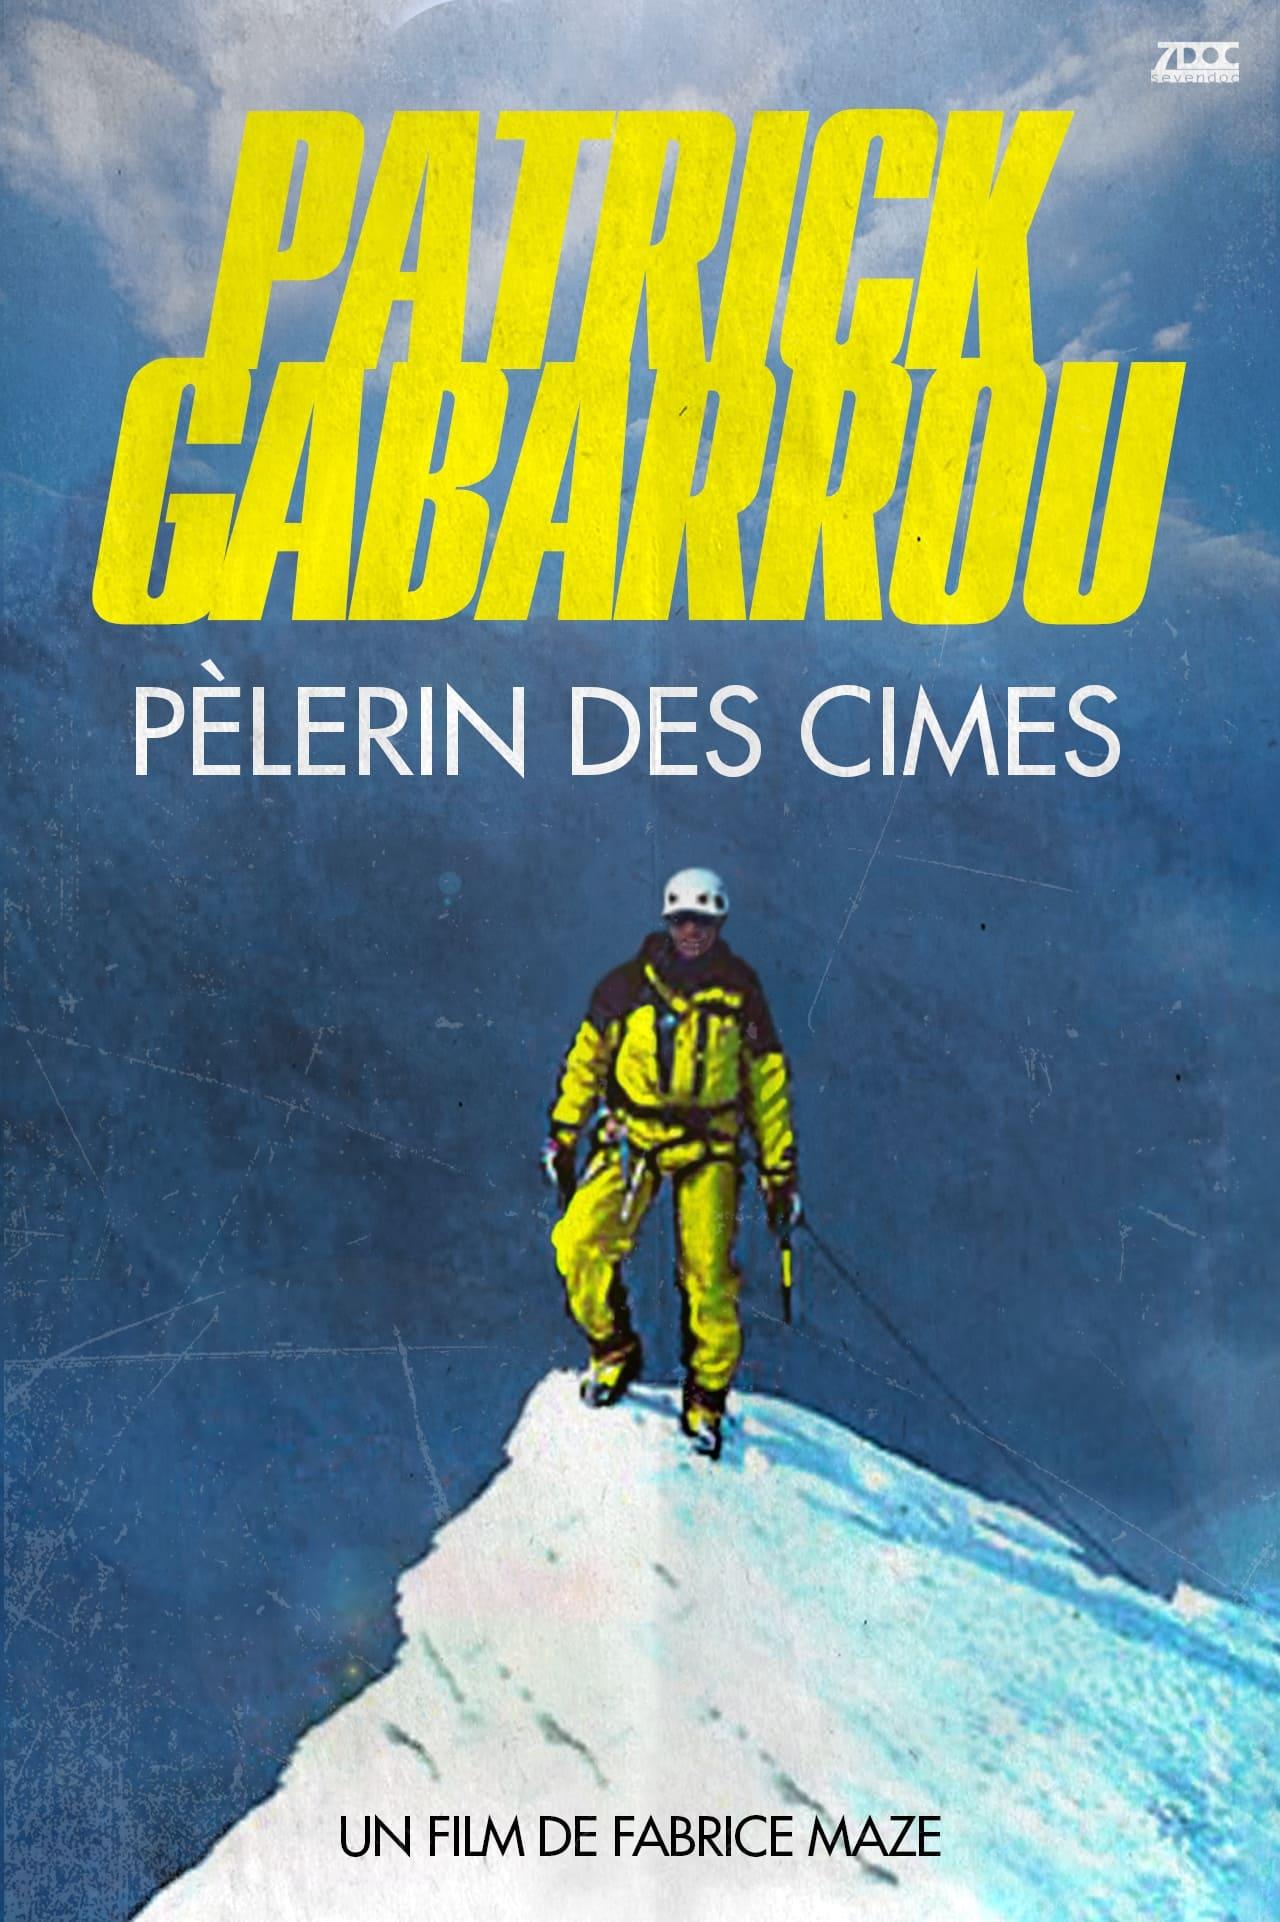 Patrick Gabarrou, Pèlerin des cimes poster